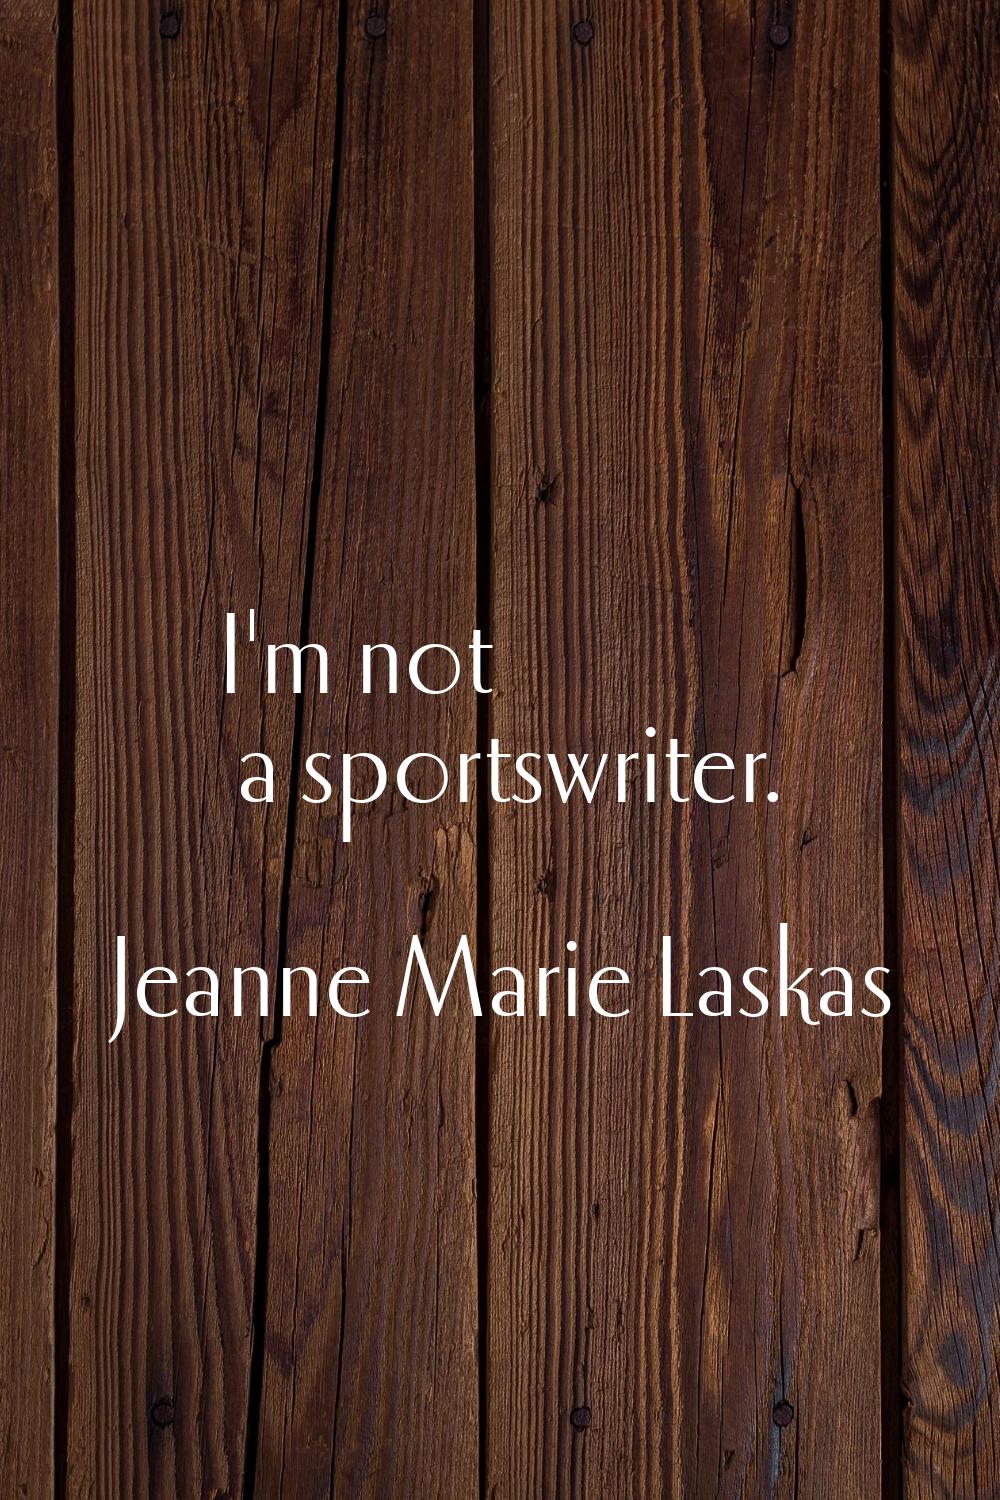 I'm not a sportswriter.